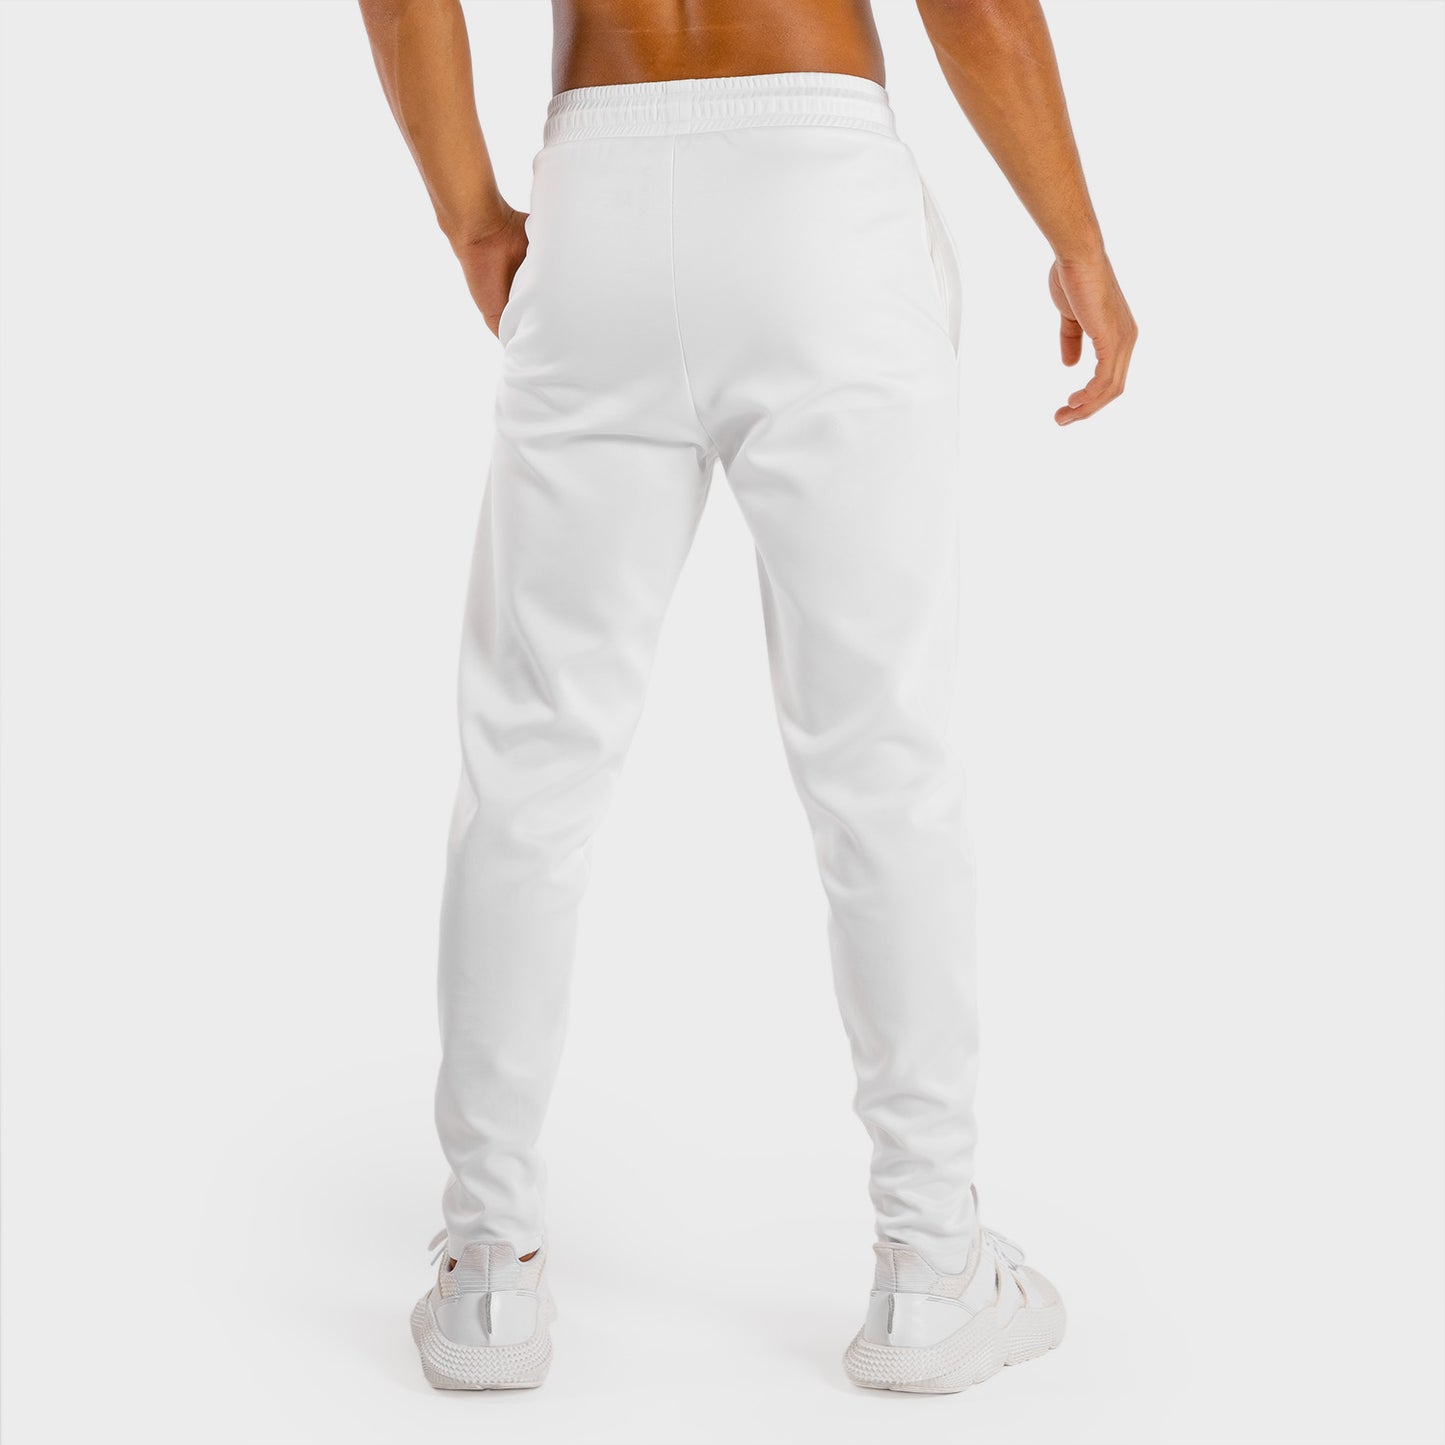 squatwolf-gym-wear-primal-joggers-men-white-workout-pants-for-men